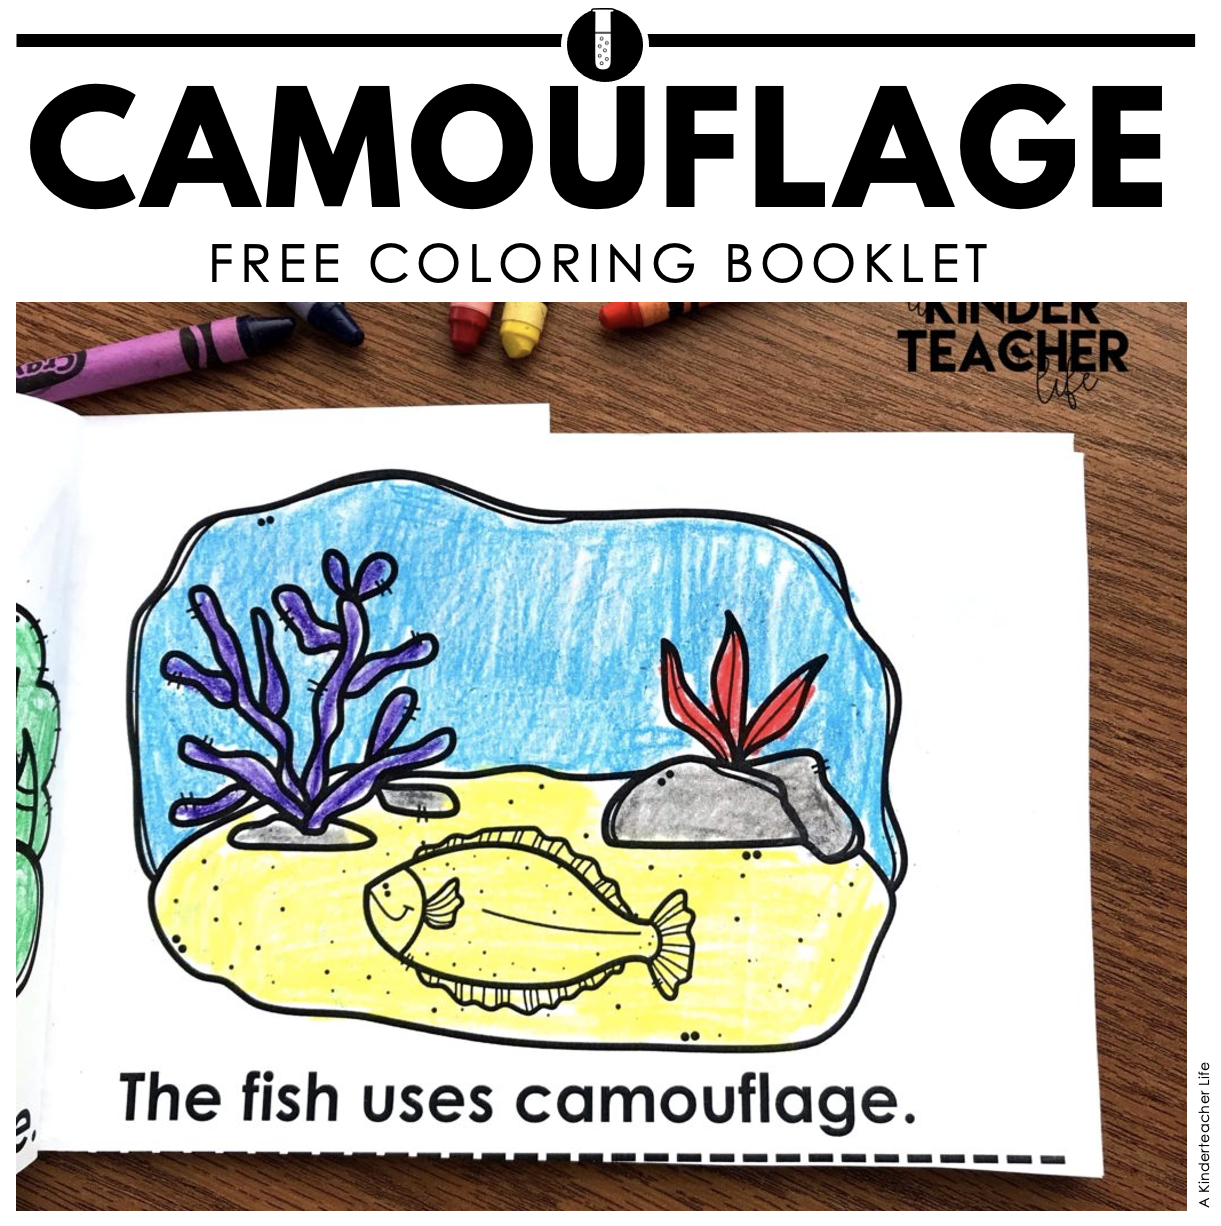 Camouflage ANIMALS COLORING BOOK freebie - A Kinderteacher Life